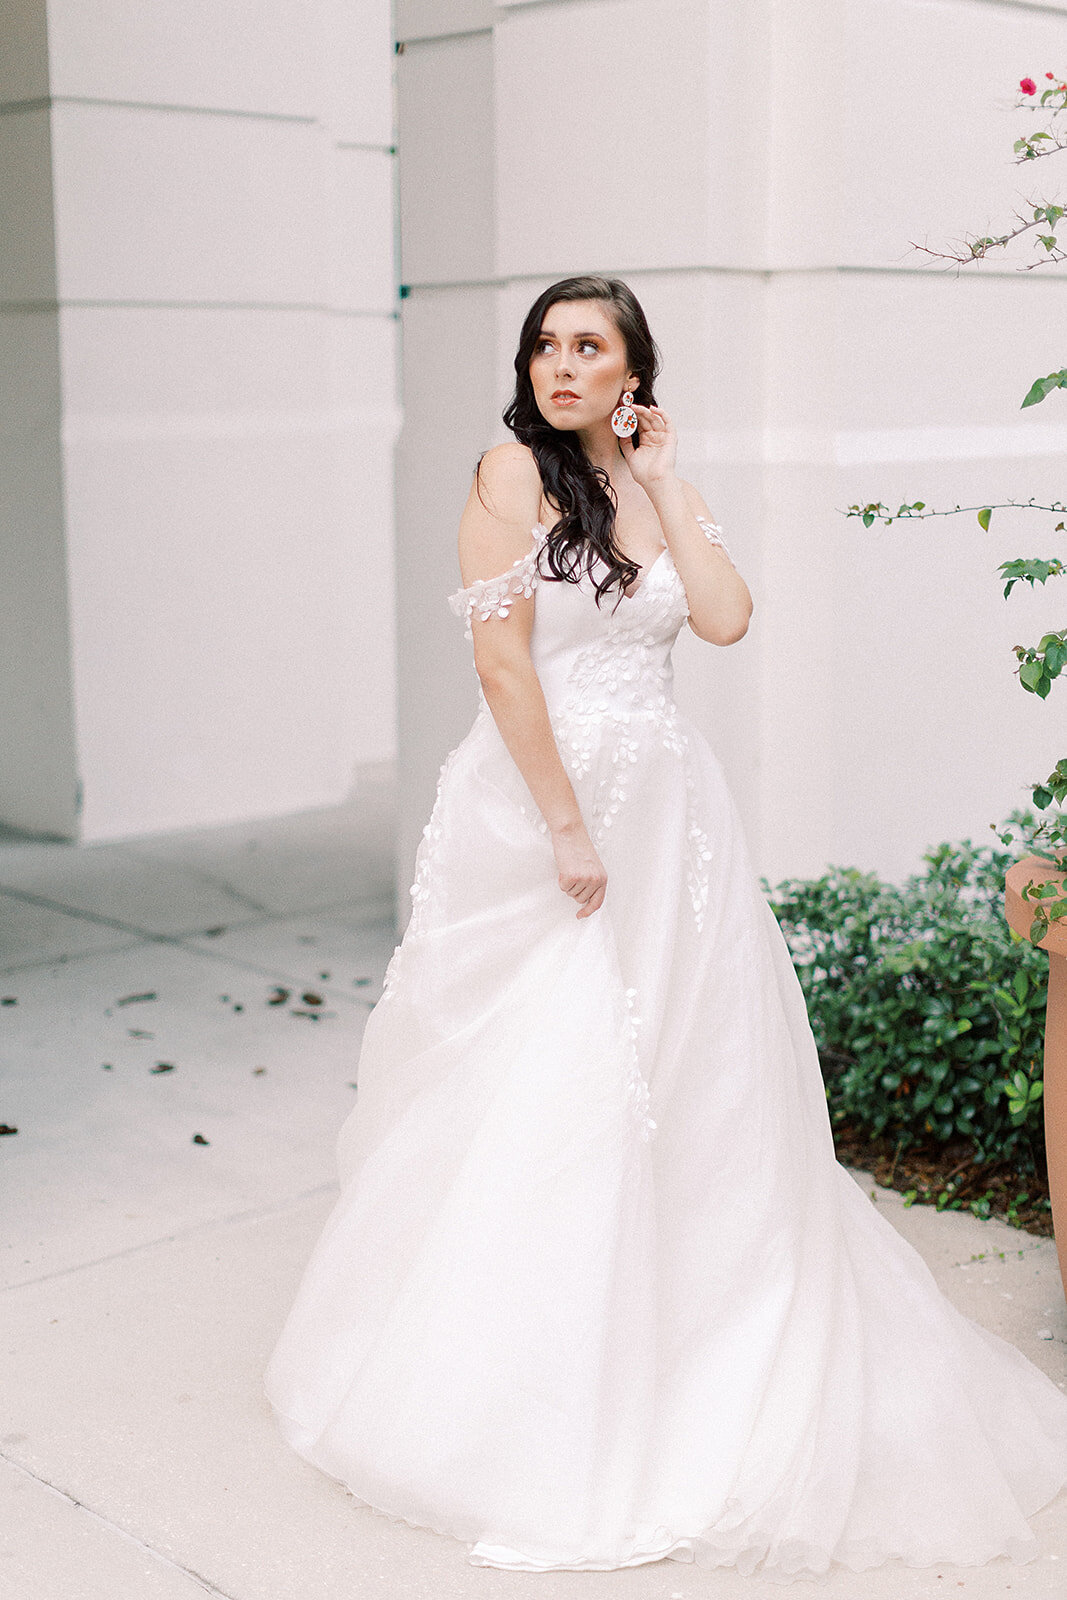 White Blossom Bridal x GAD Artistry Orlando Wedding Bride Editorial Photographer Casie Marie Photography-76